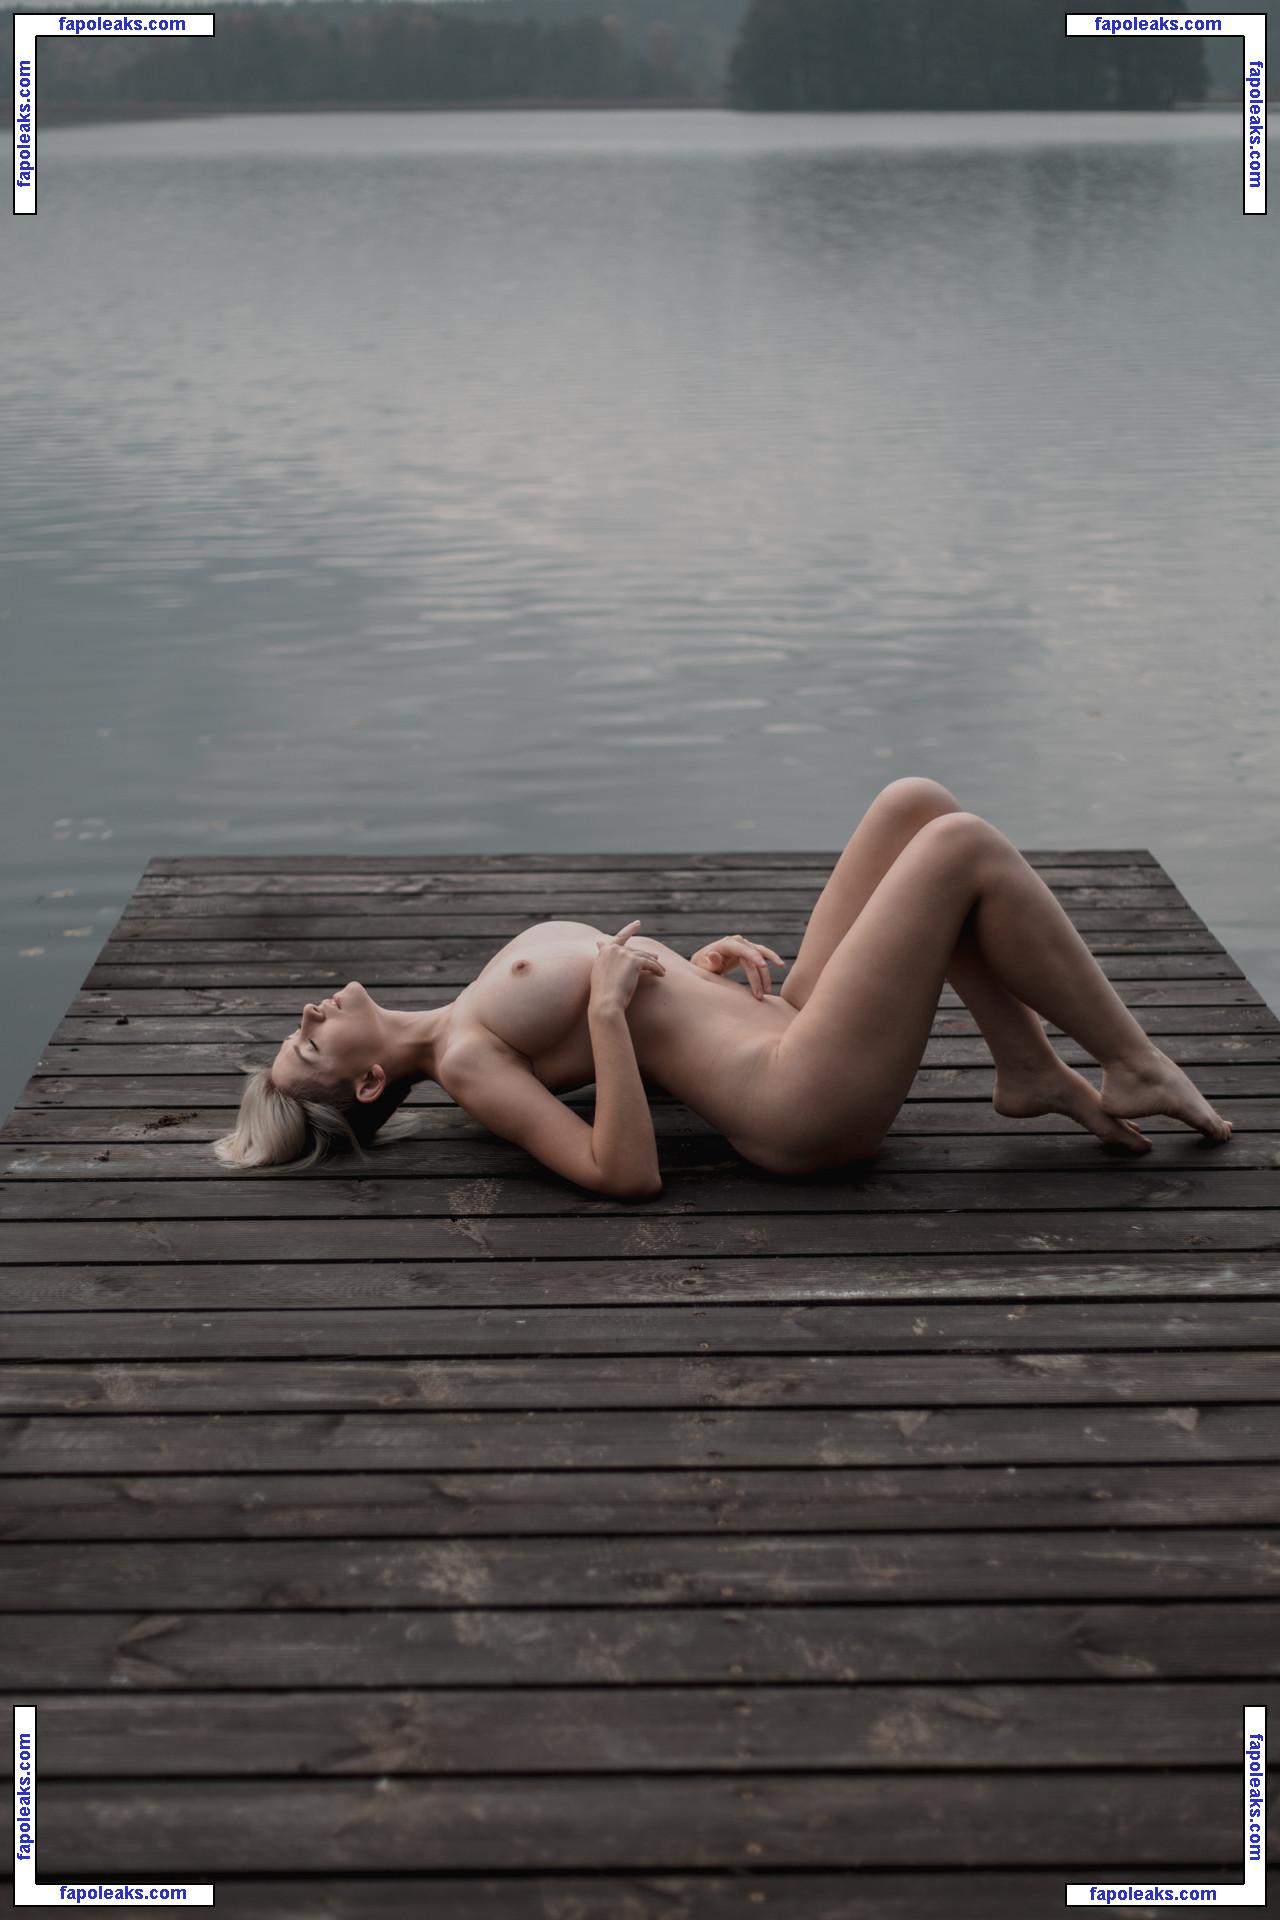 Aleksandraka / Precja / aleksandra.ka.modeling nude photo #0002 from OnlyFans